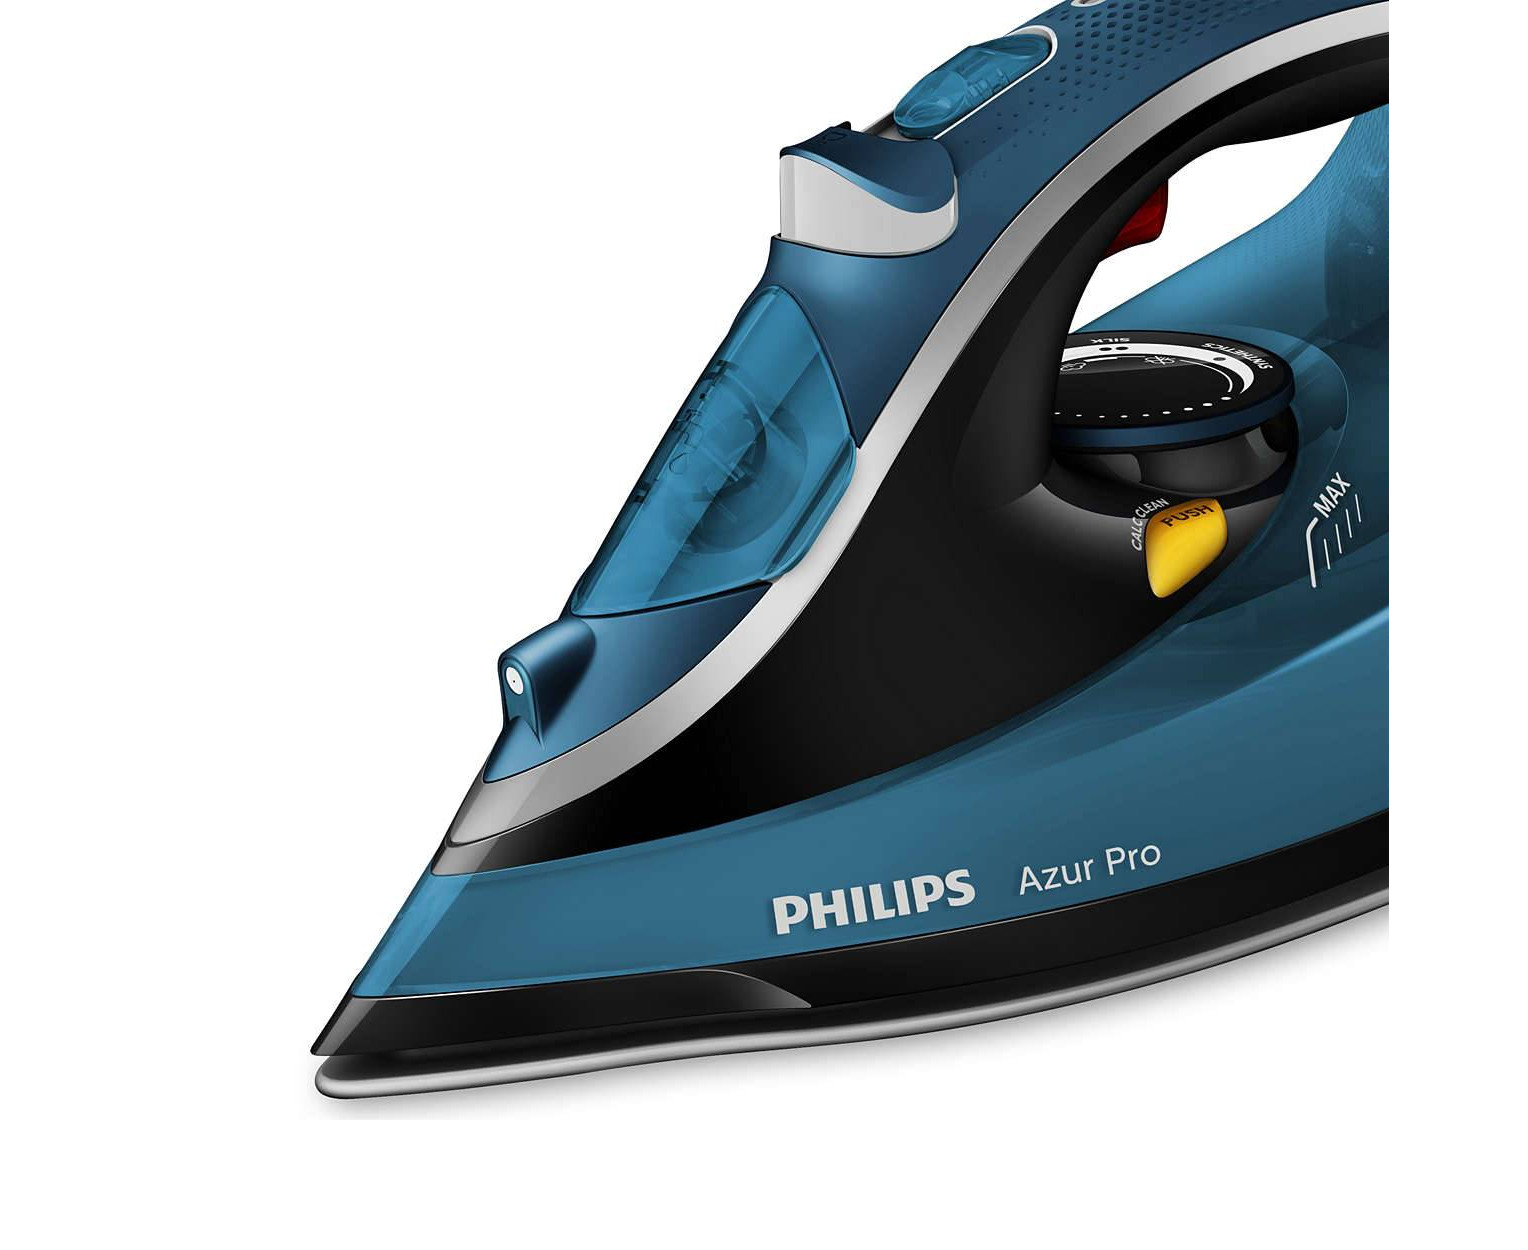 Azur pro. Утюг Philips Azur Pro. Утюг Philips gc4881/20 Azur Pro. Утюг Philips Azur GC 4881. Philips gc4887/30 Azur Pro.